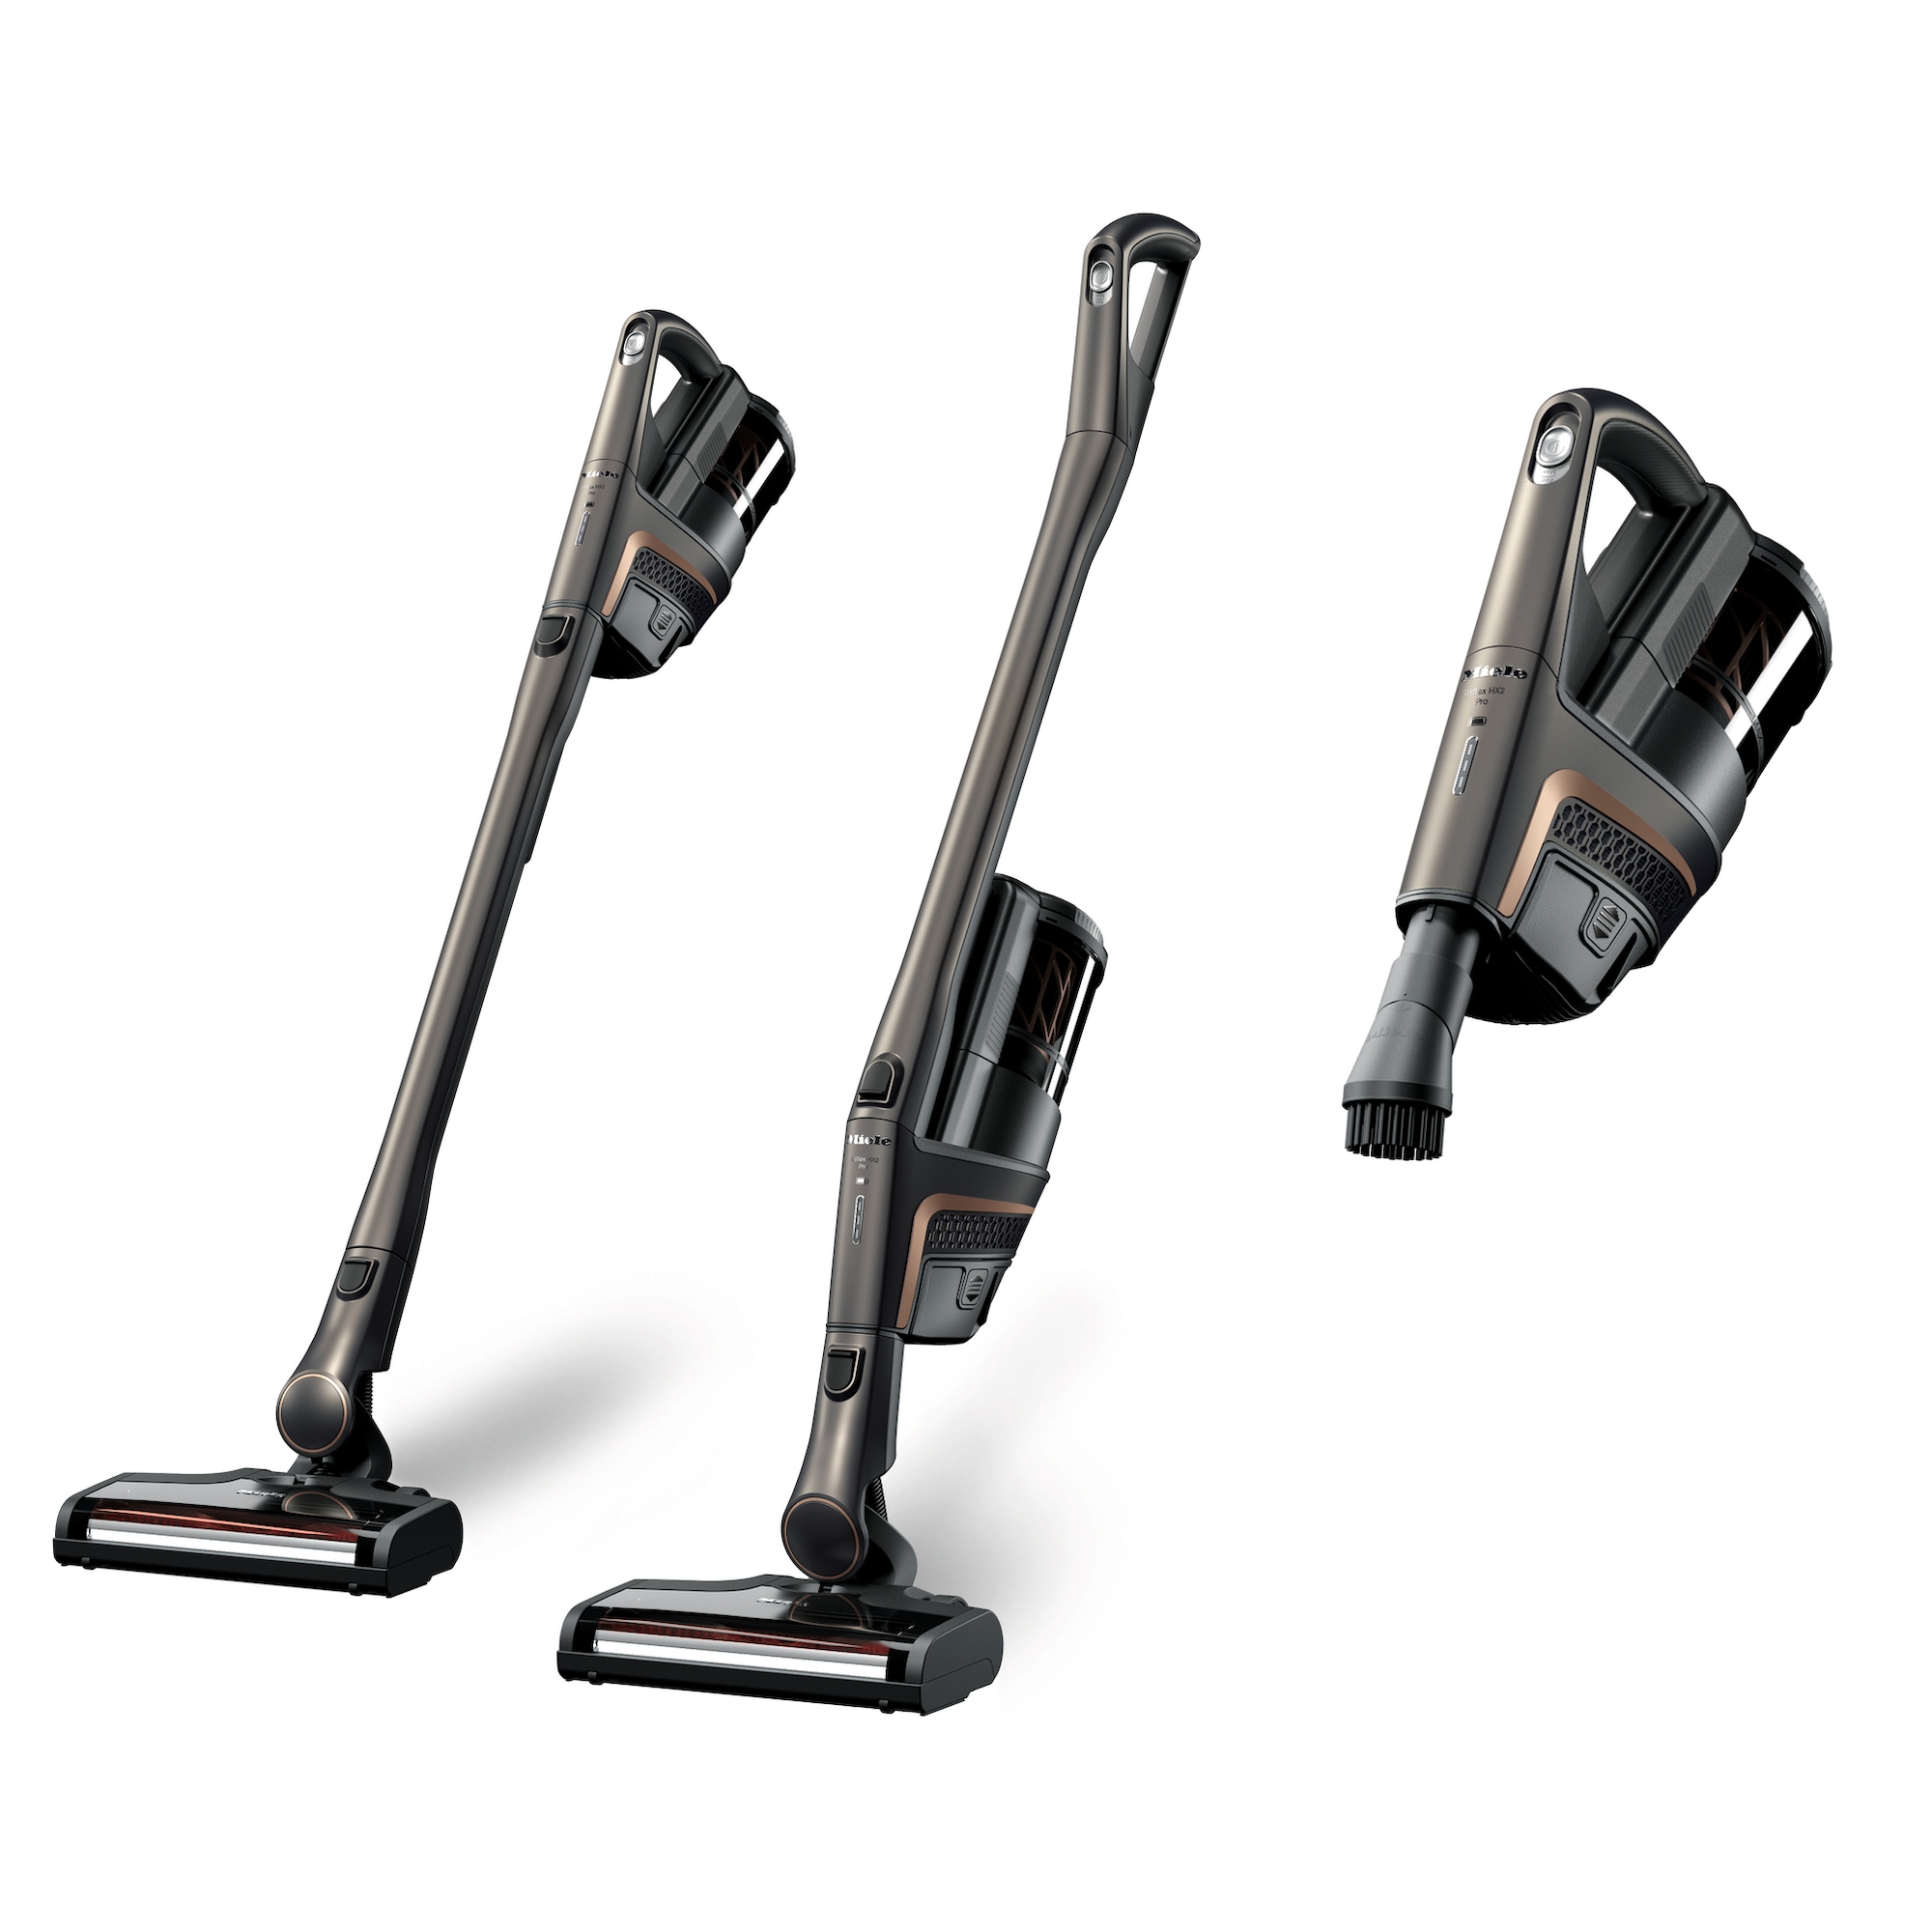 Miele TriFlex HX2 Cordless Stick Vacuum Cleaner